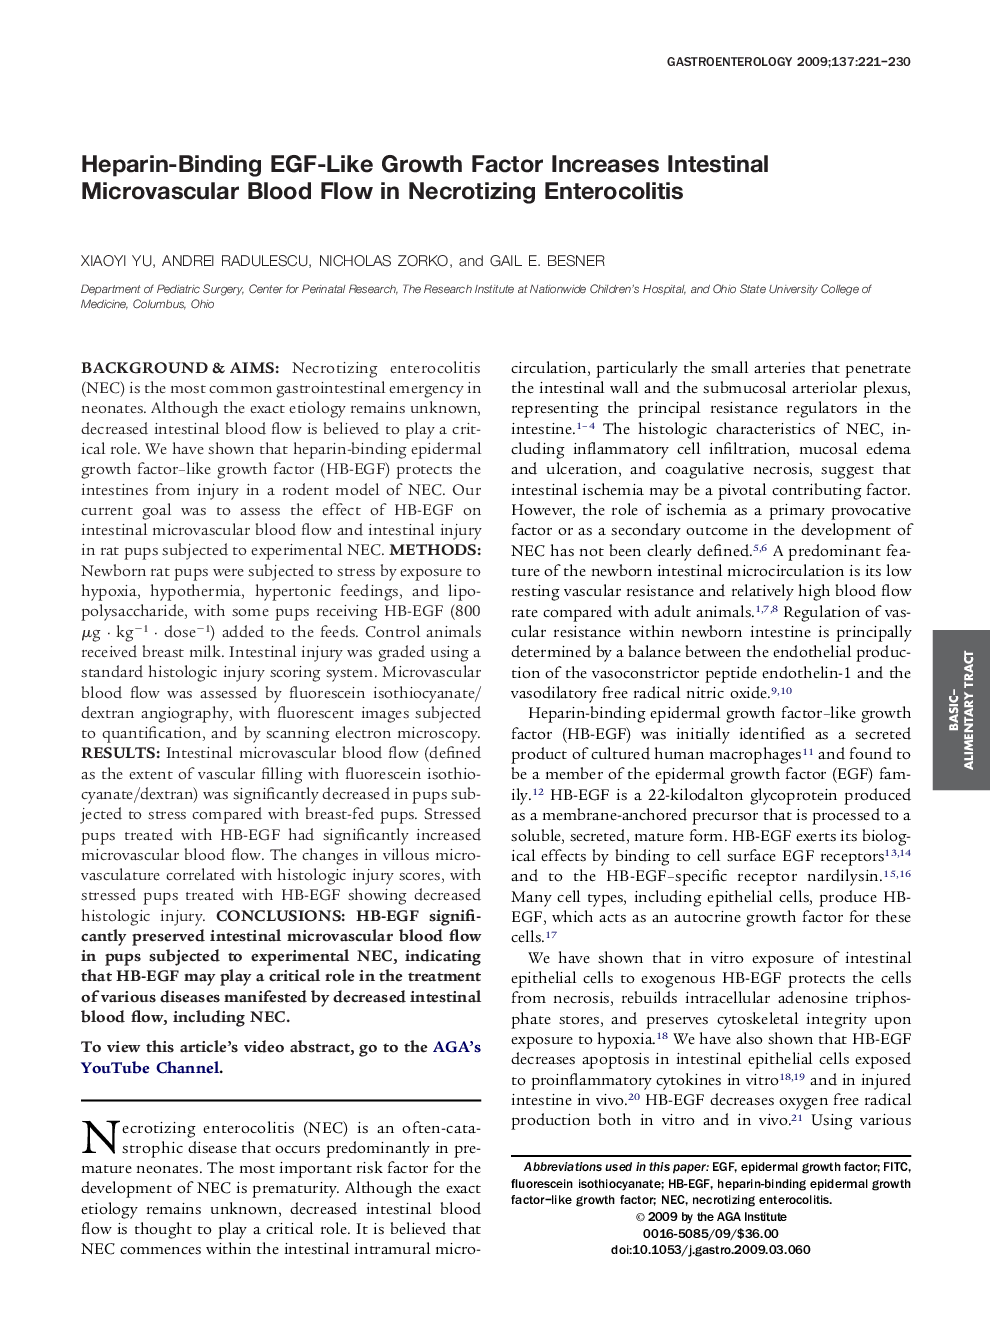 Heparin-Binding EGF-Like Growth Factor Increases Intestinal Microvascular Blood Flow in Necrotizing Enterocolitis 